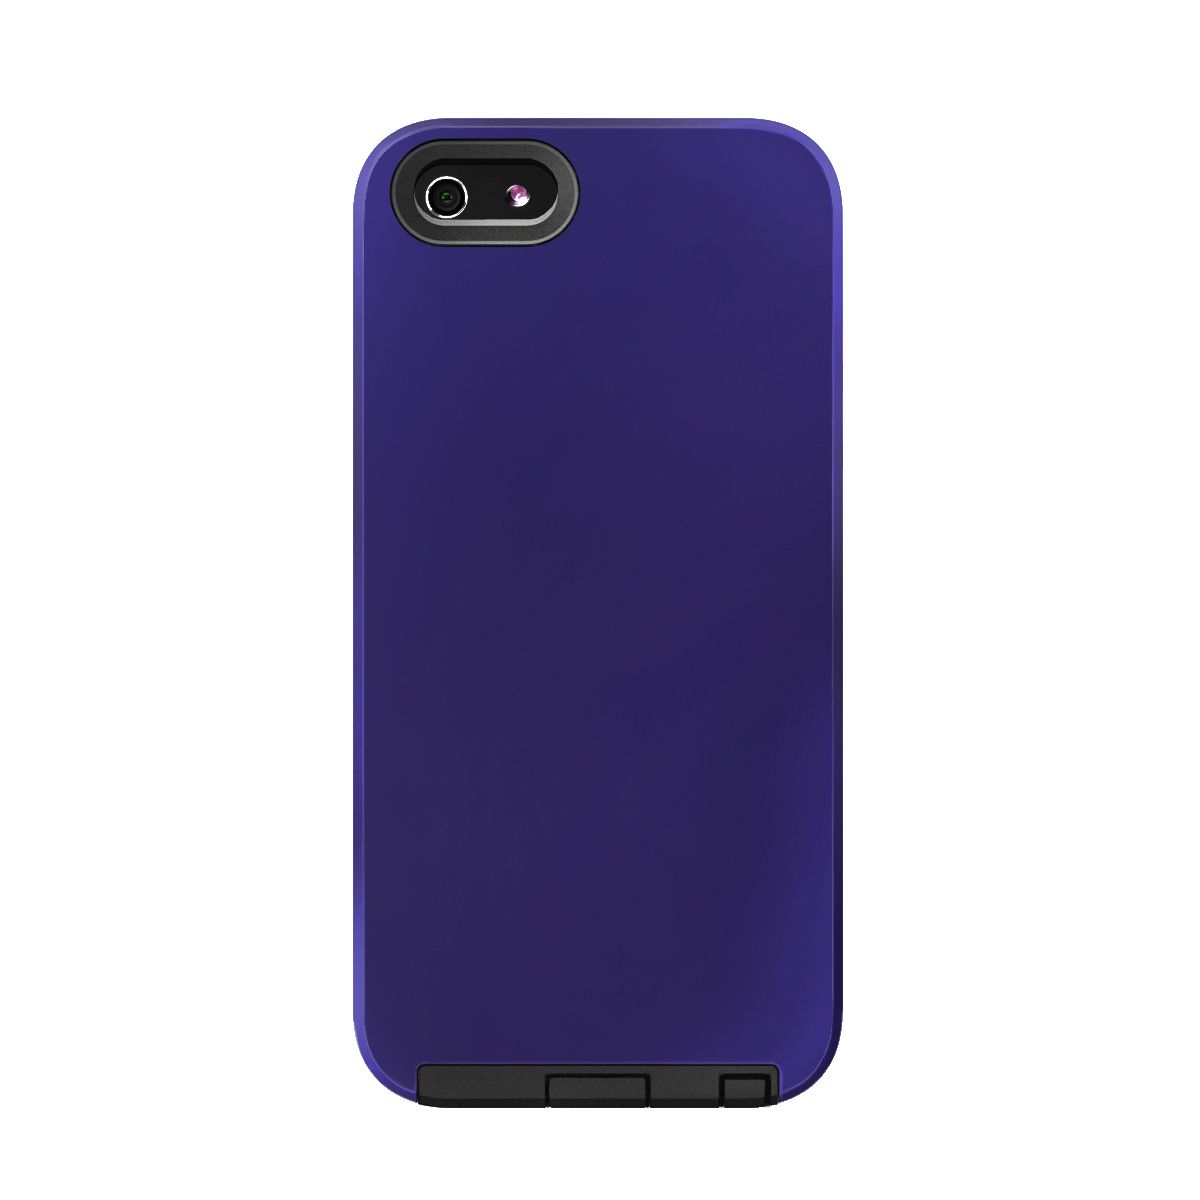 Acase Superleggera Pro Dual Layer Case Cover for Apple iPhone 5 Purple